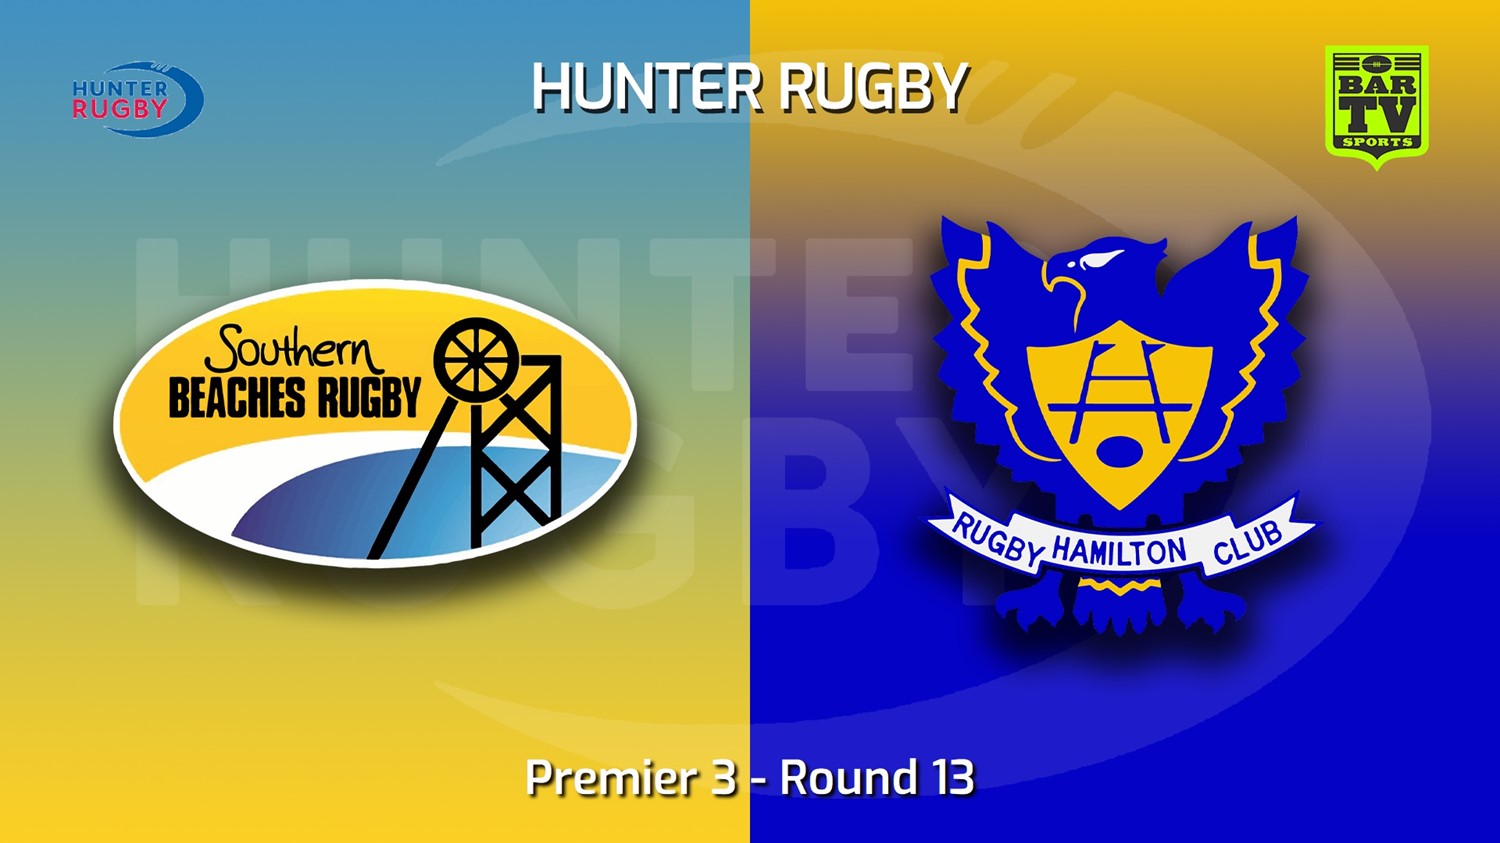 220723-Hunter Rugby Round 13 - Premier 3 - Southern Beaches v Hamilton Hawks Slate Image